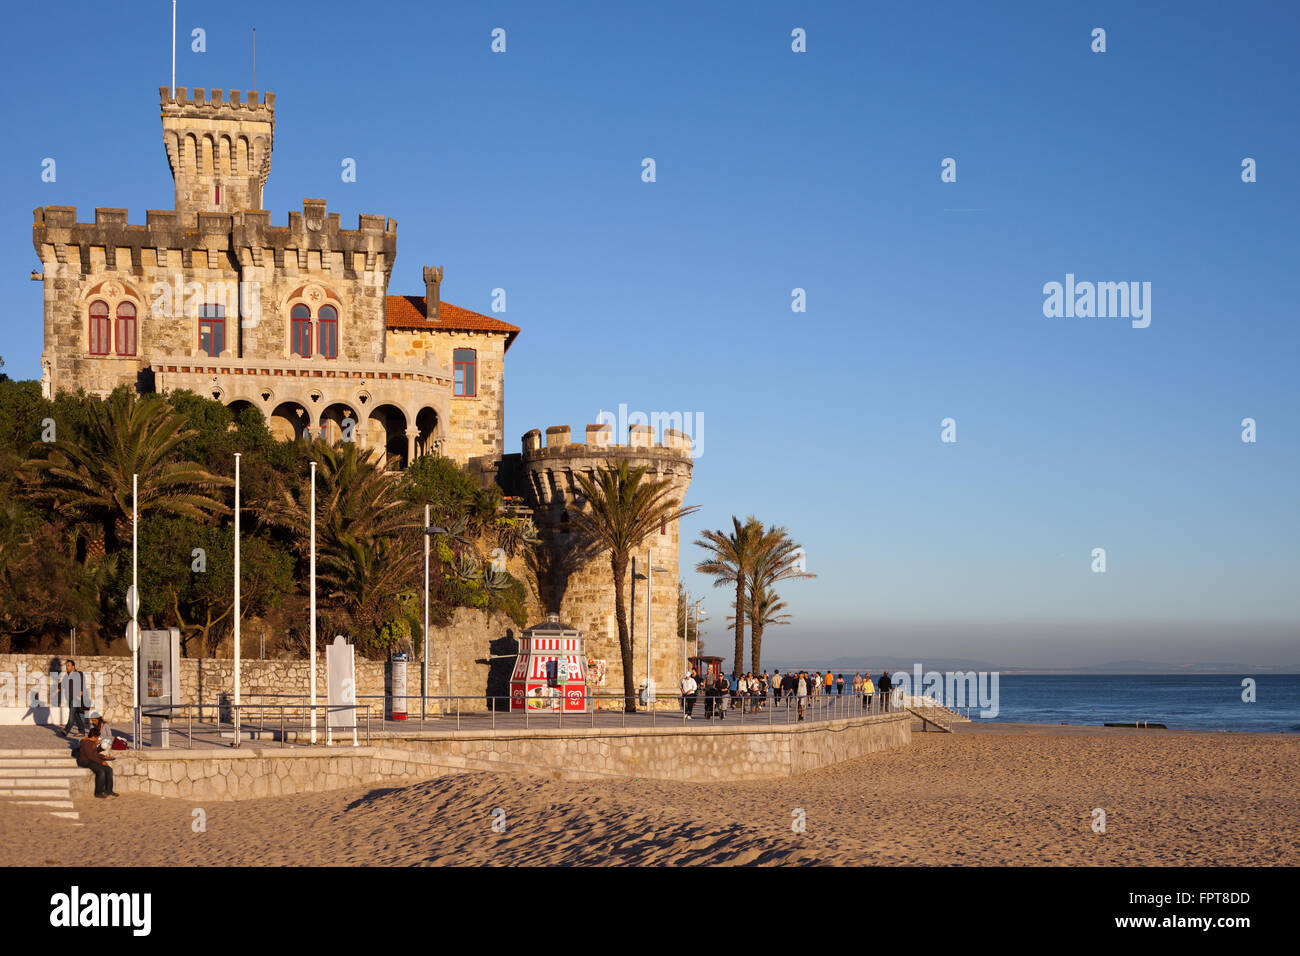 Portugal, Estoril, castle on Tamariz beach at sunset by the Atlantic Ocean, resort town near Lisbon Stock Photo